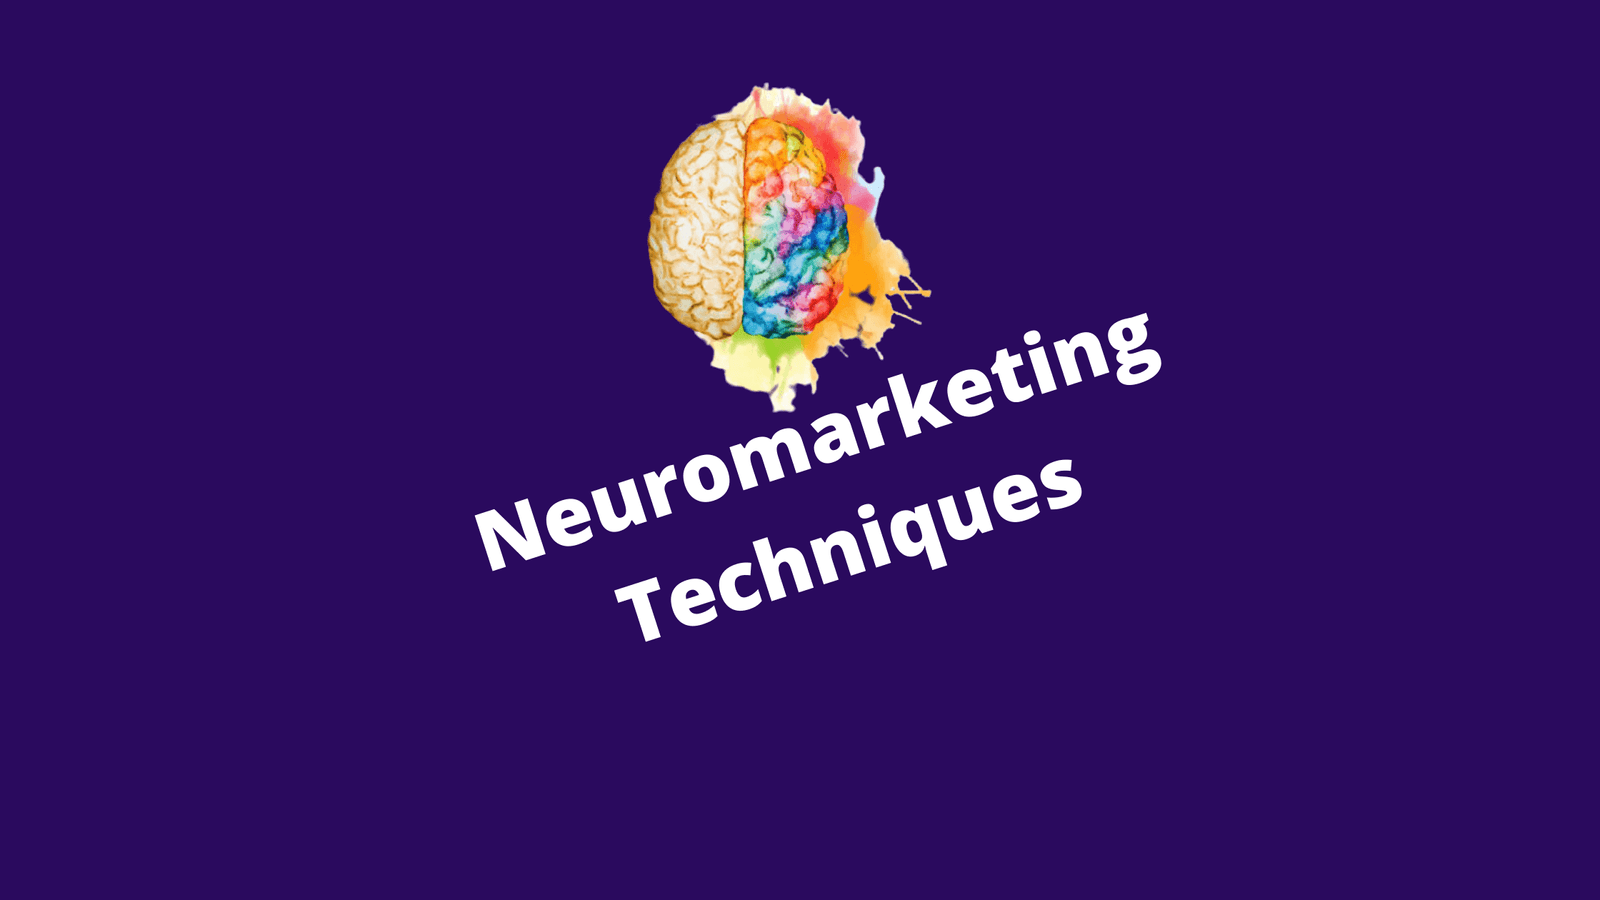 neuromarketing techniques